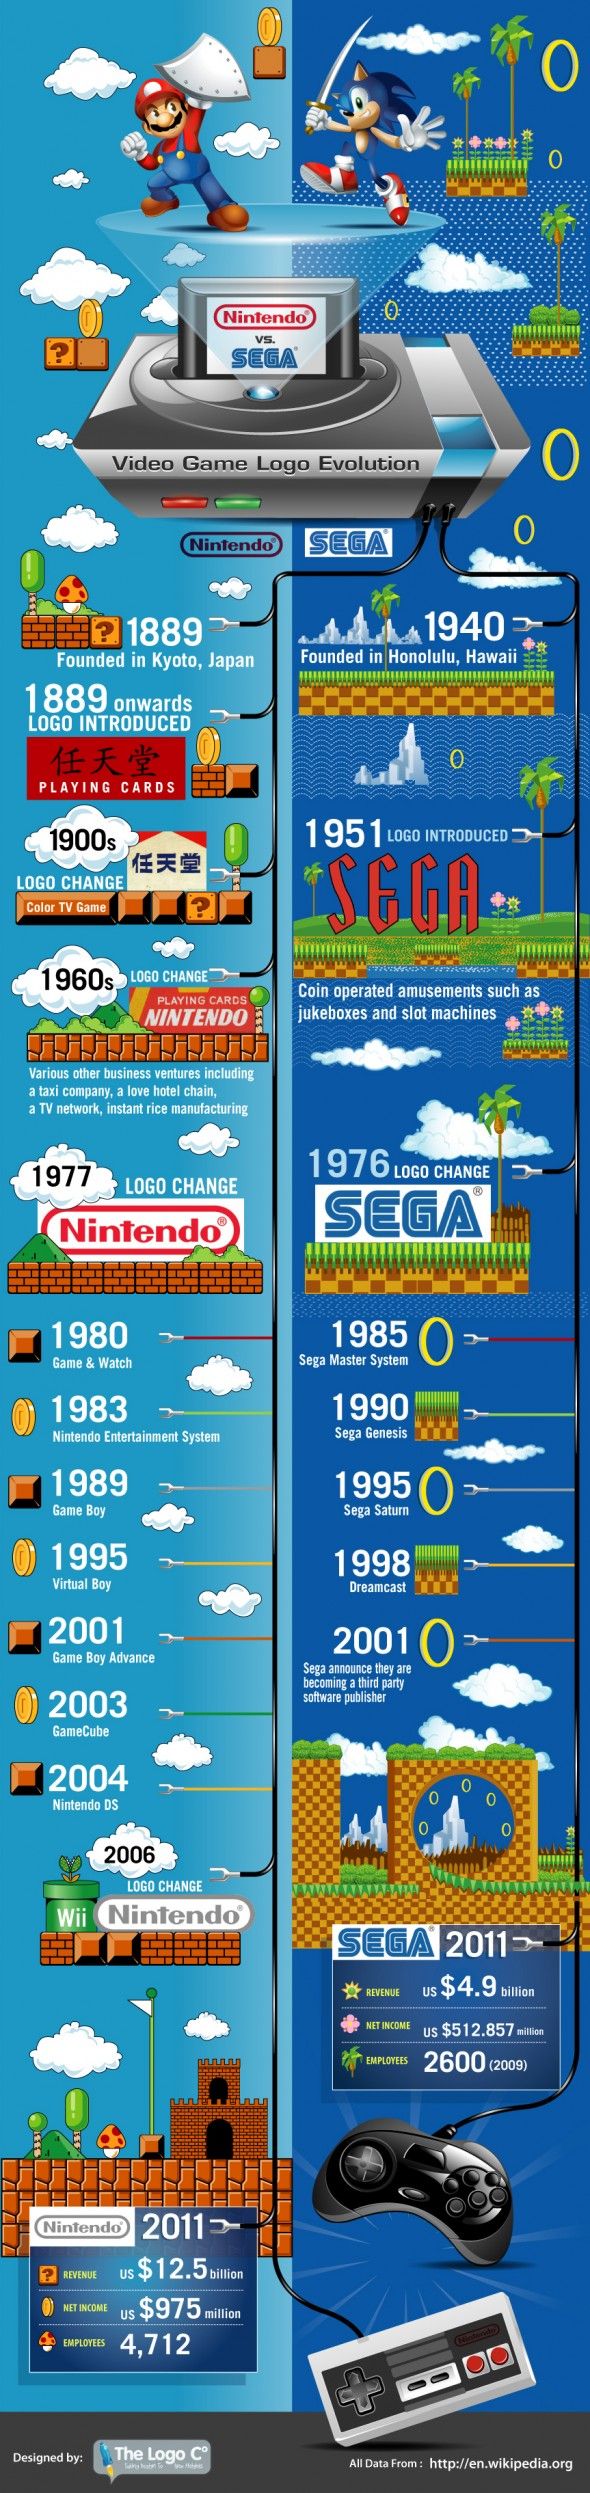 Nintendo vs Sega: эволюция логотипа видеоигры [ИНФОГРАФИЯ] NintendovsSegaVideo